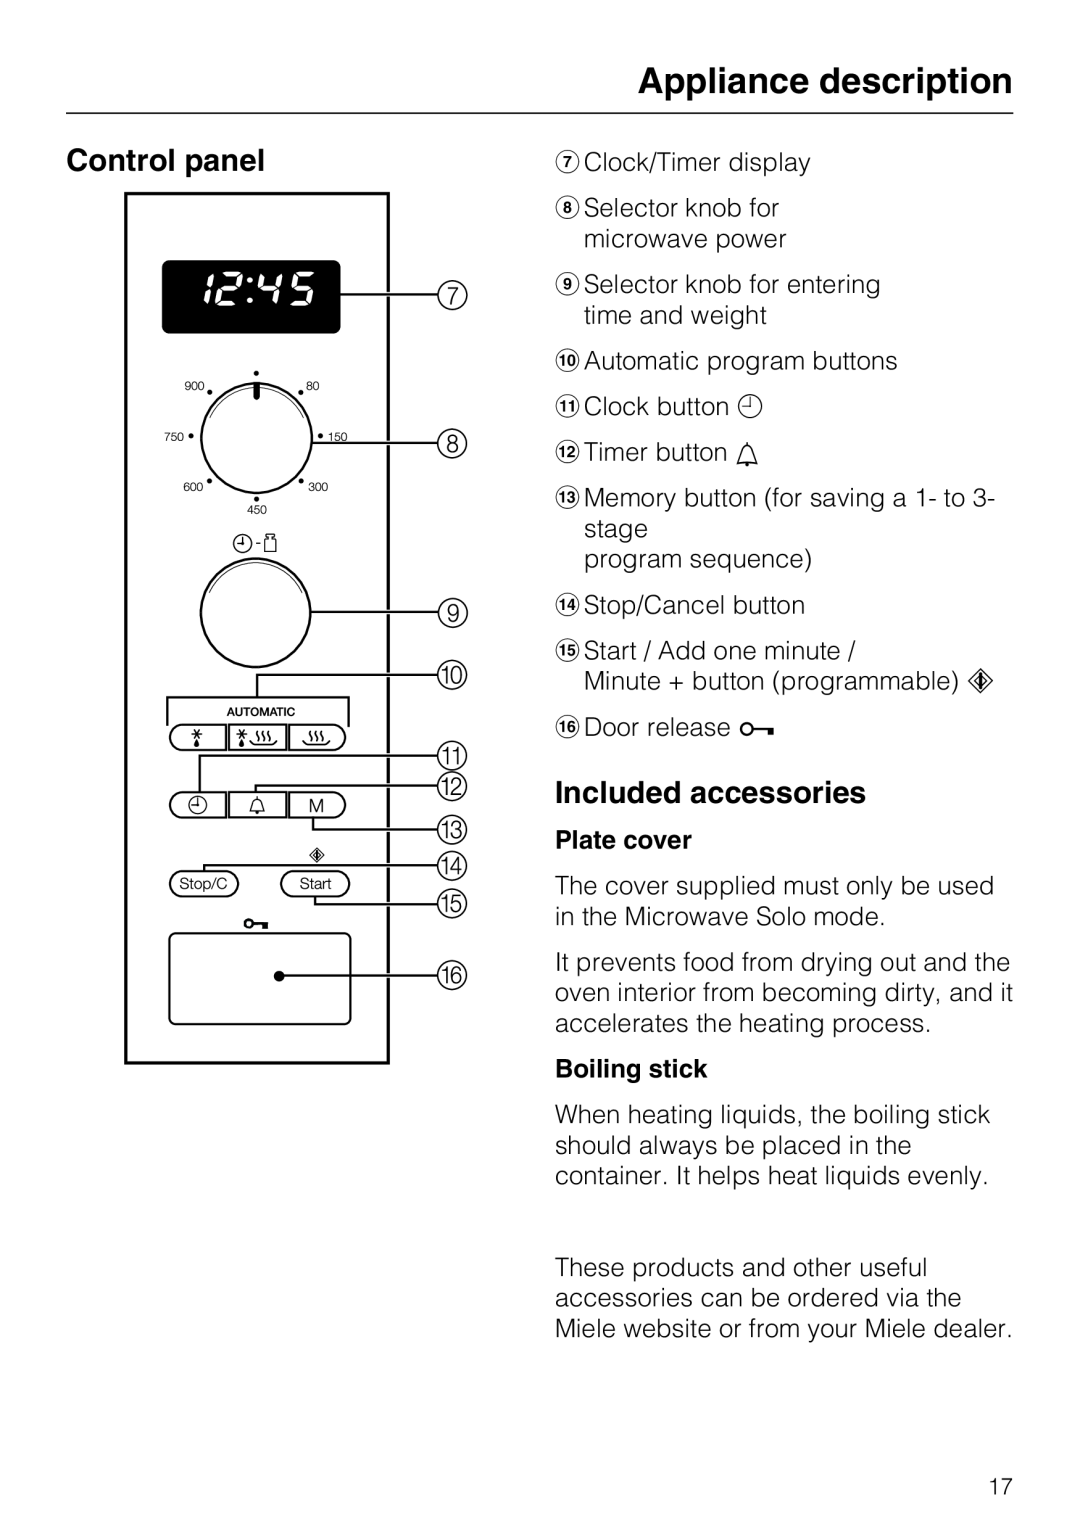 Miele 09 798 350 Appliance description, Control panel, Included accessories, Plate cover, Boiling stick 